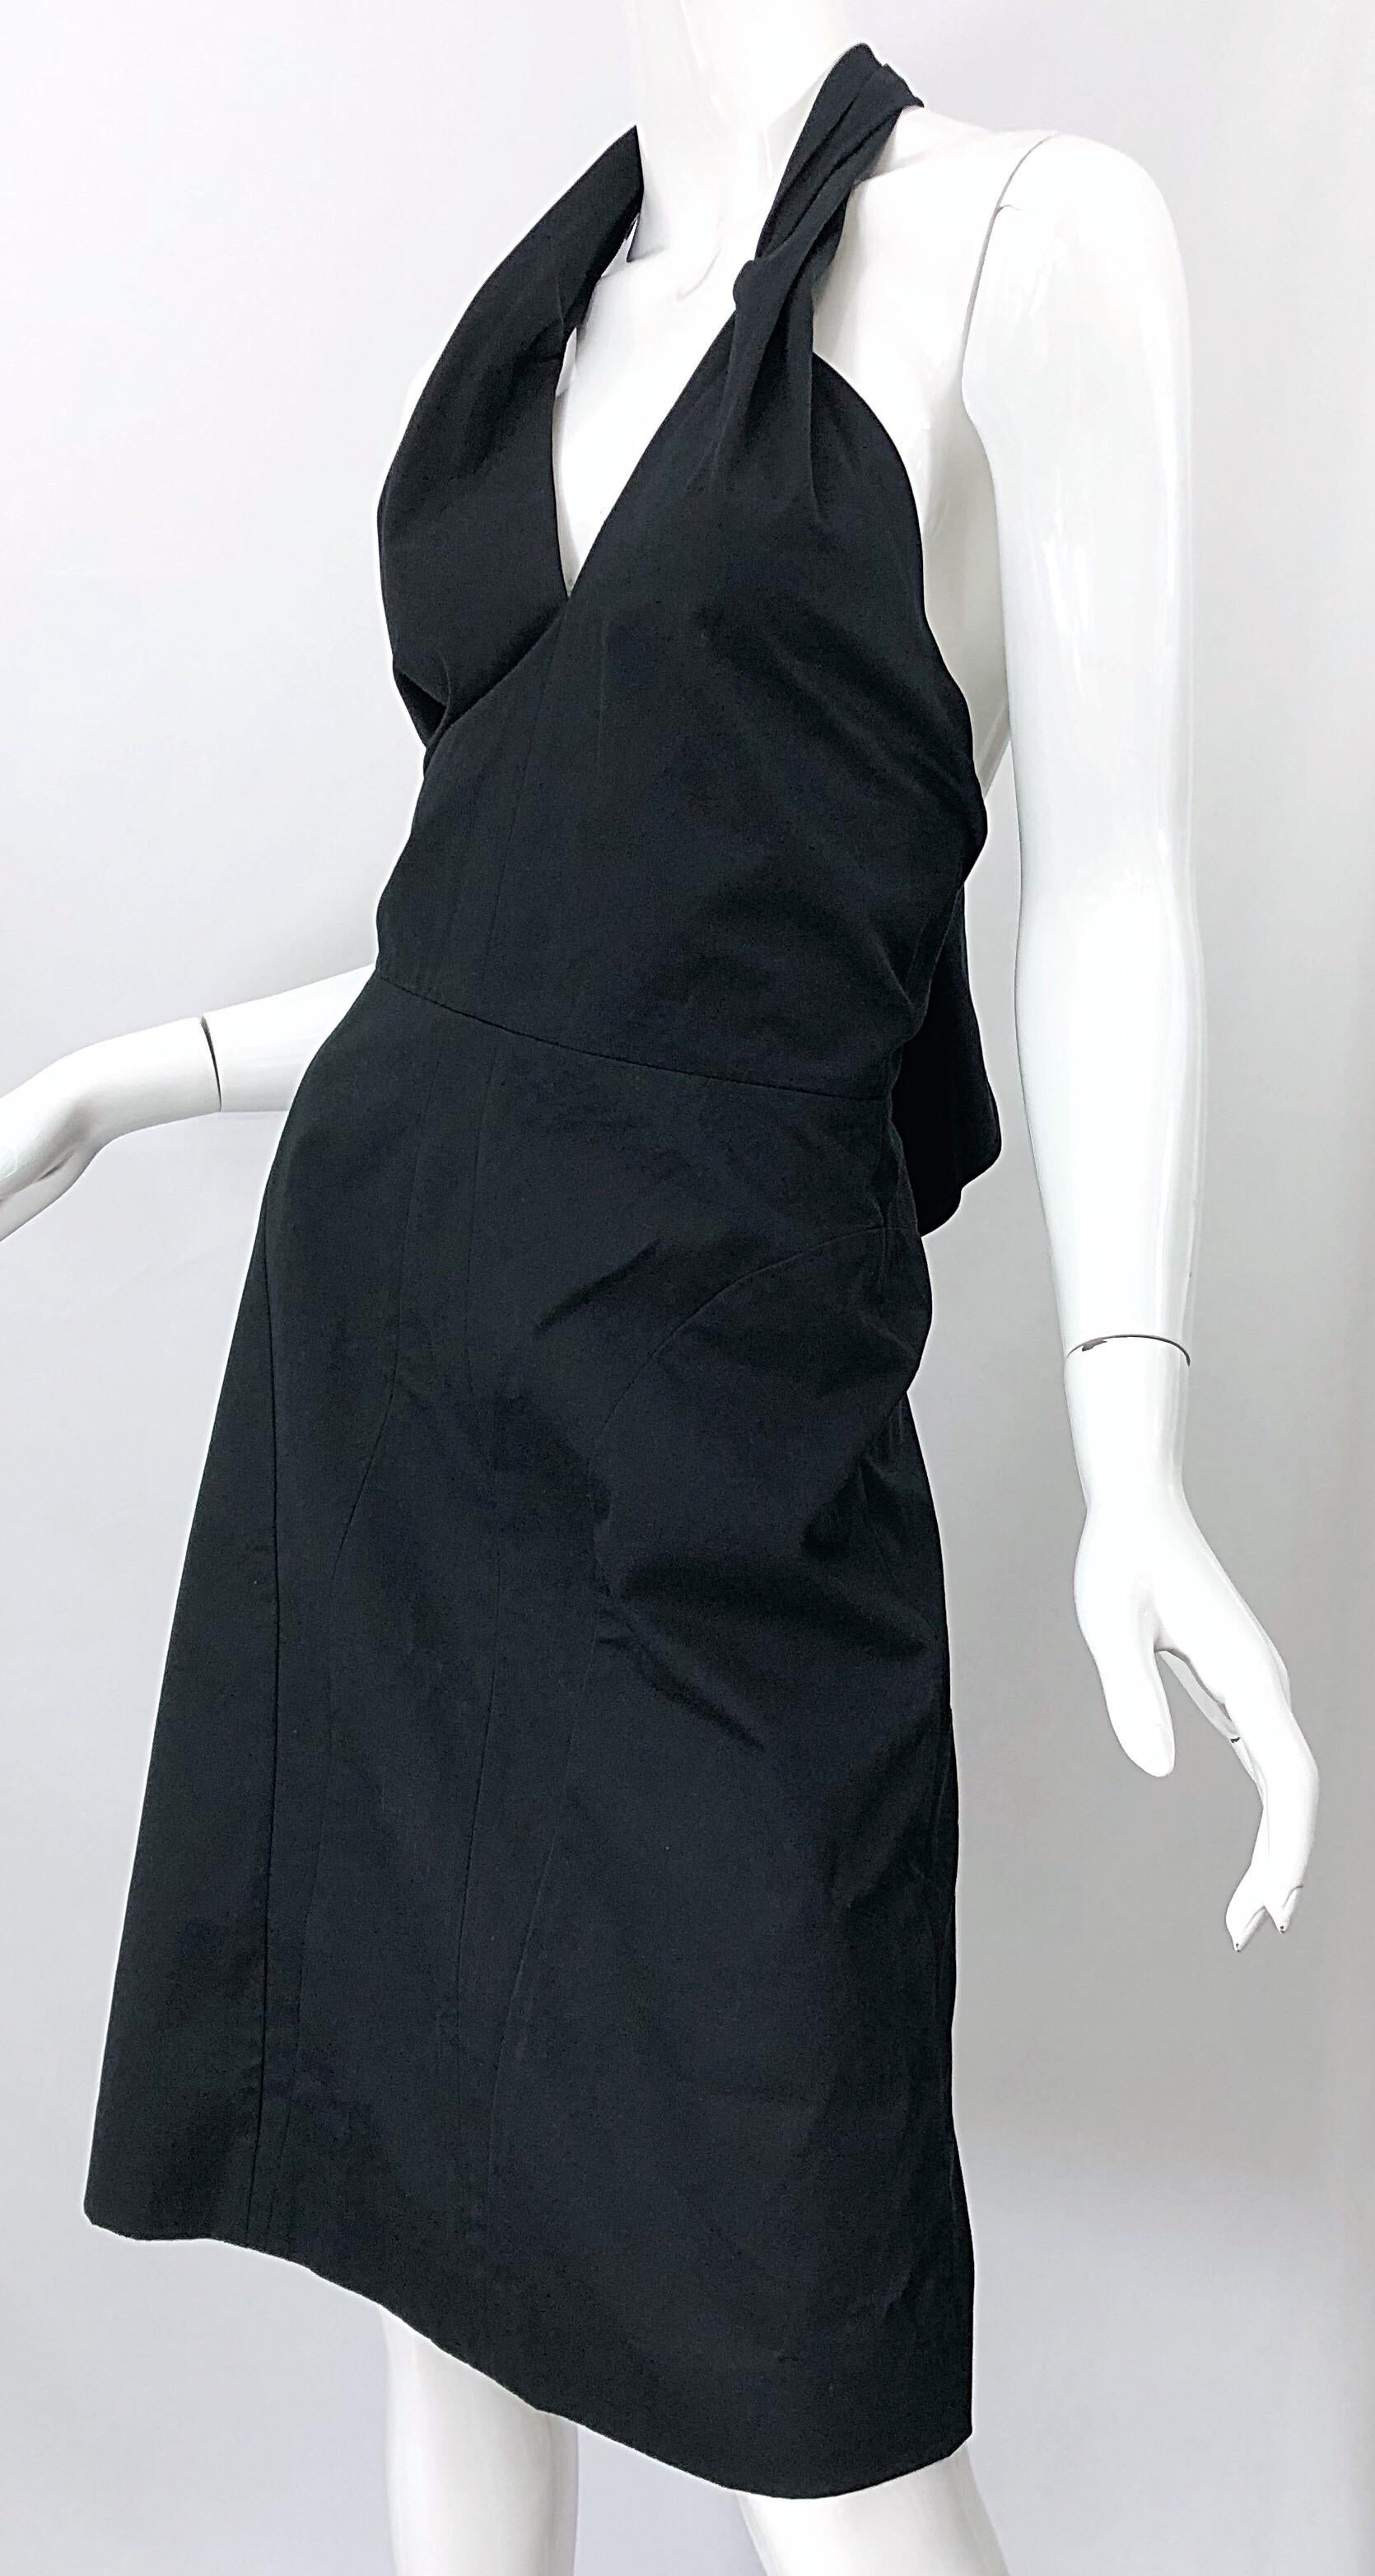 Yves Saint Laurent SS 2010 Runway Black Cotton Size 38 Plunging YSL Halter Dress For Sale 4